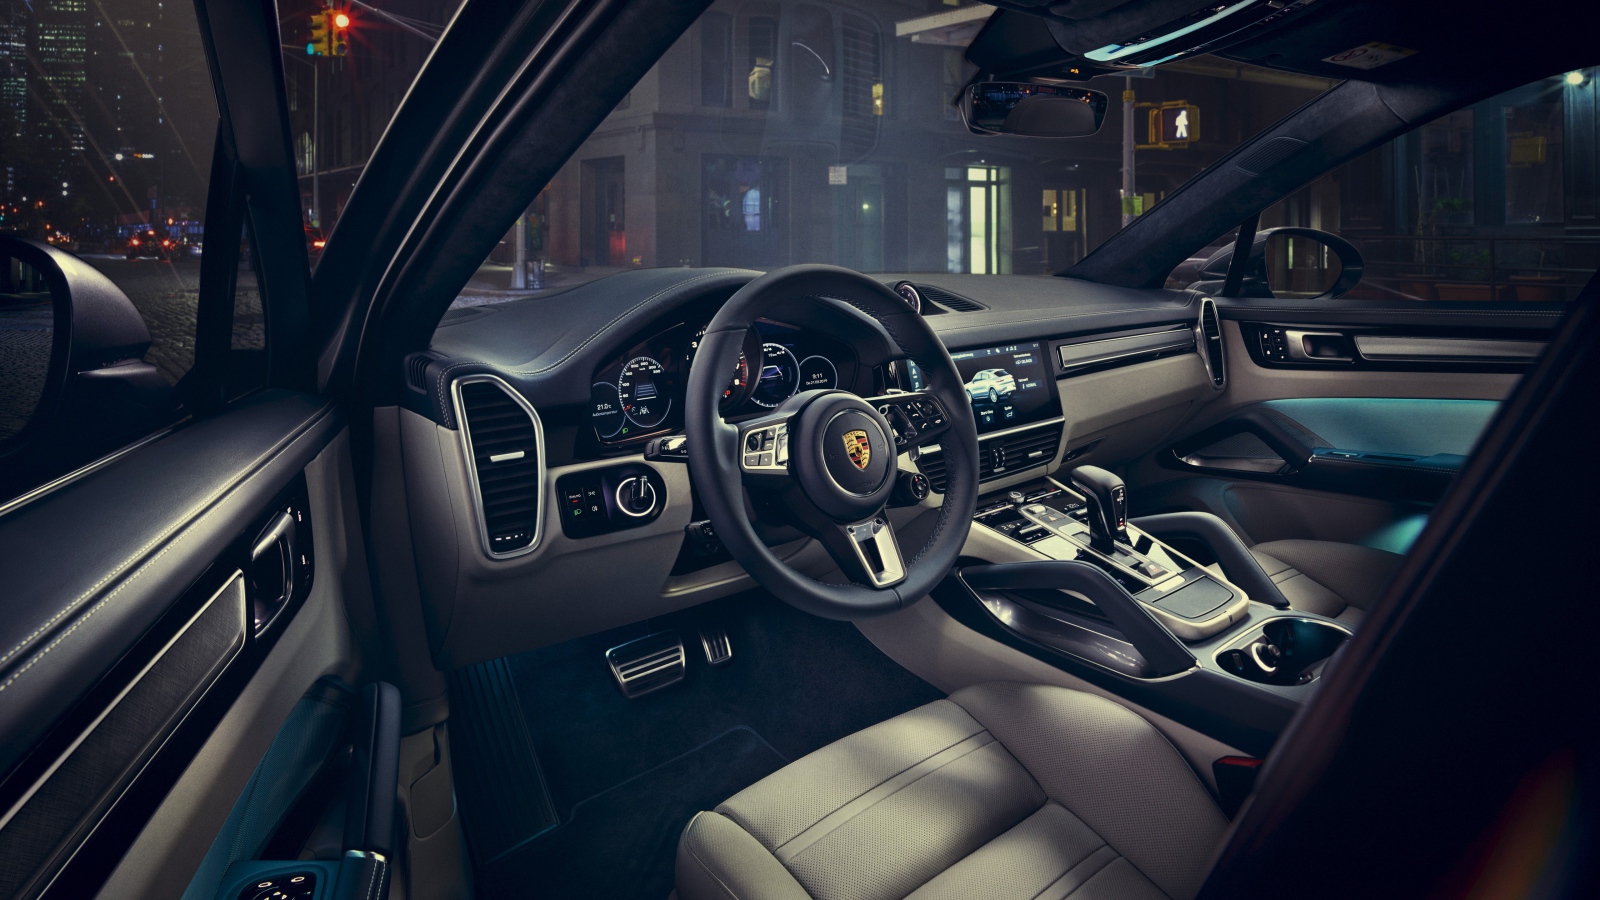 Leather stylish interior Porsche Cayenne Coupe, 2019